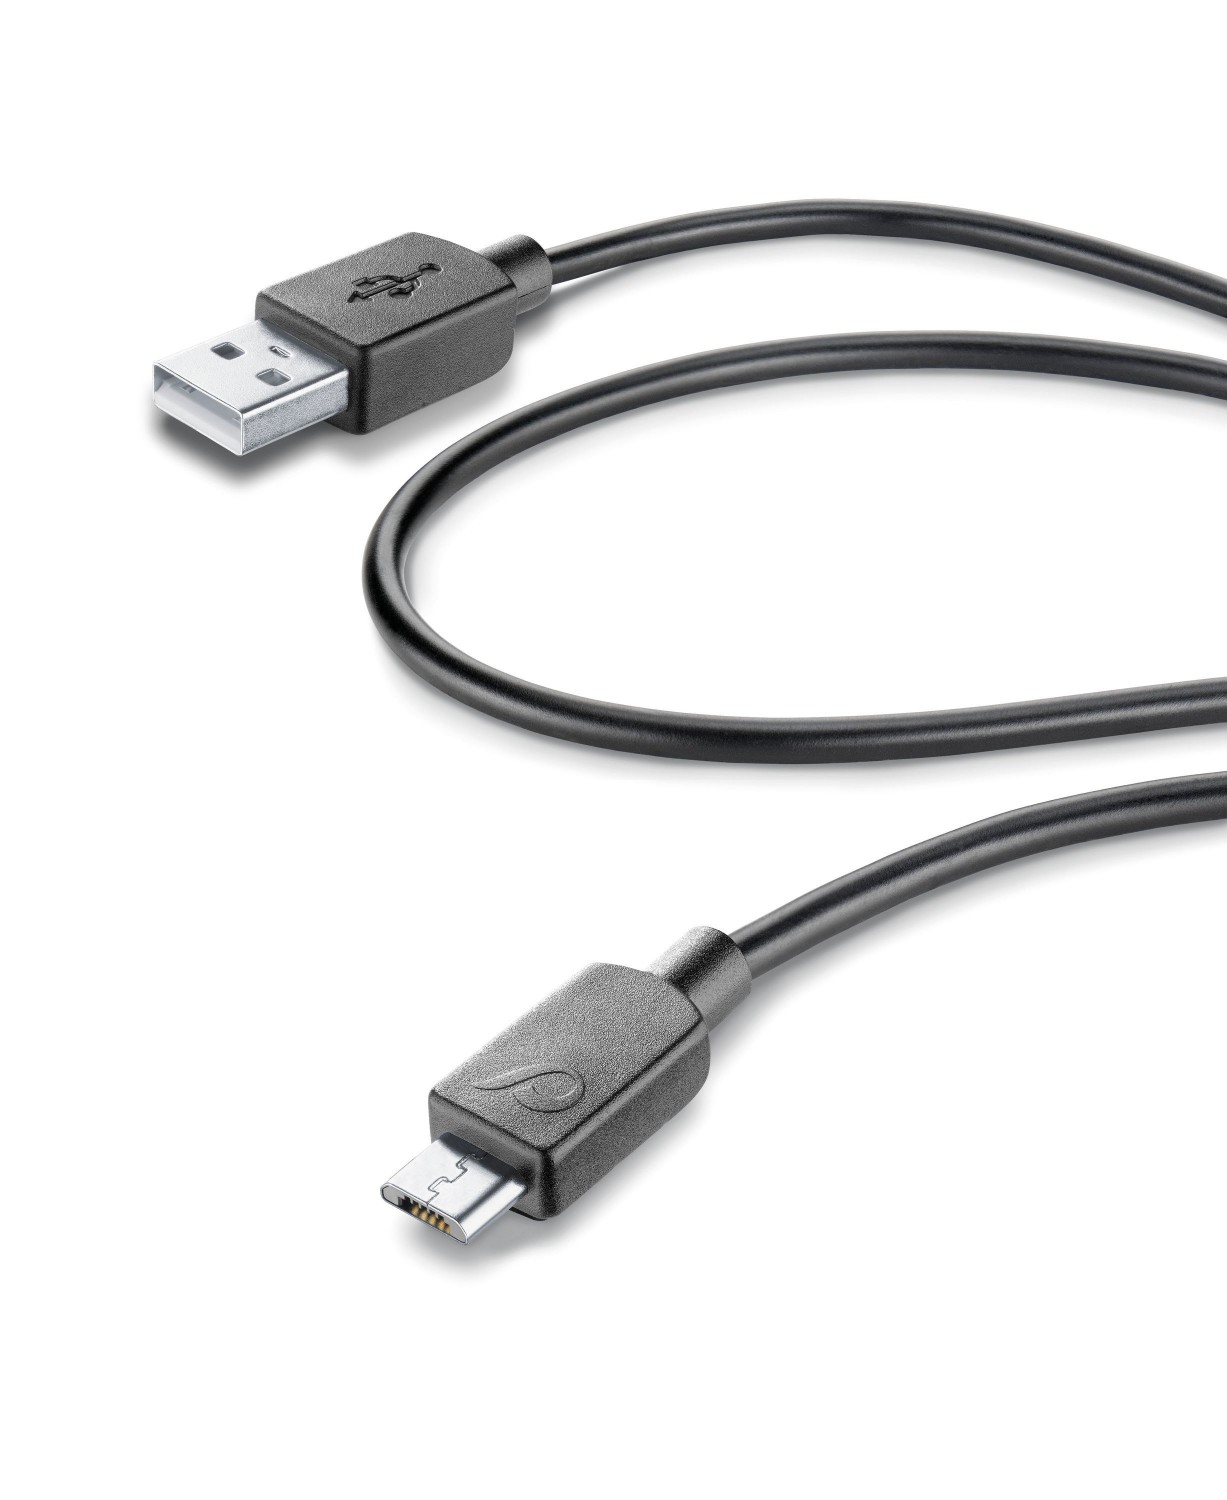 USB datový kabel Cellularline s micro USB konektorem, 60 cm, černý